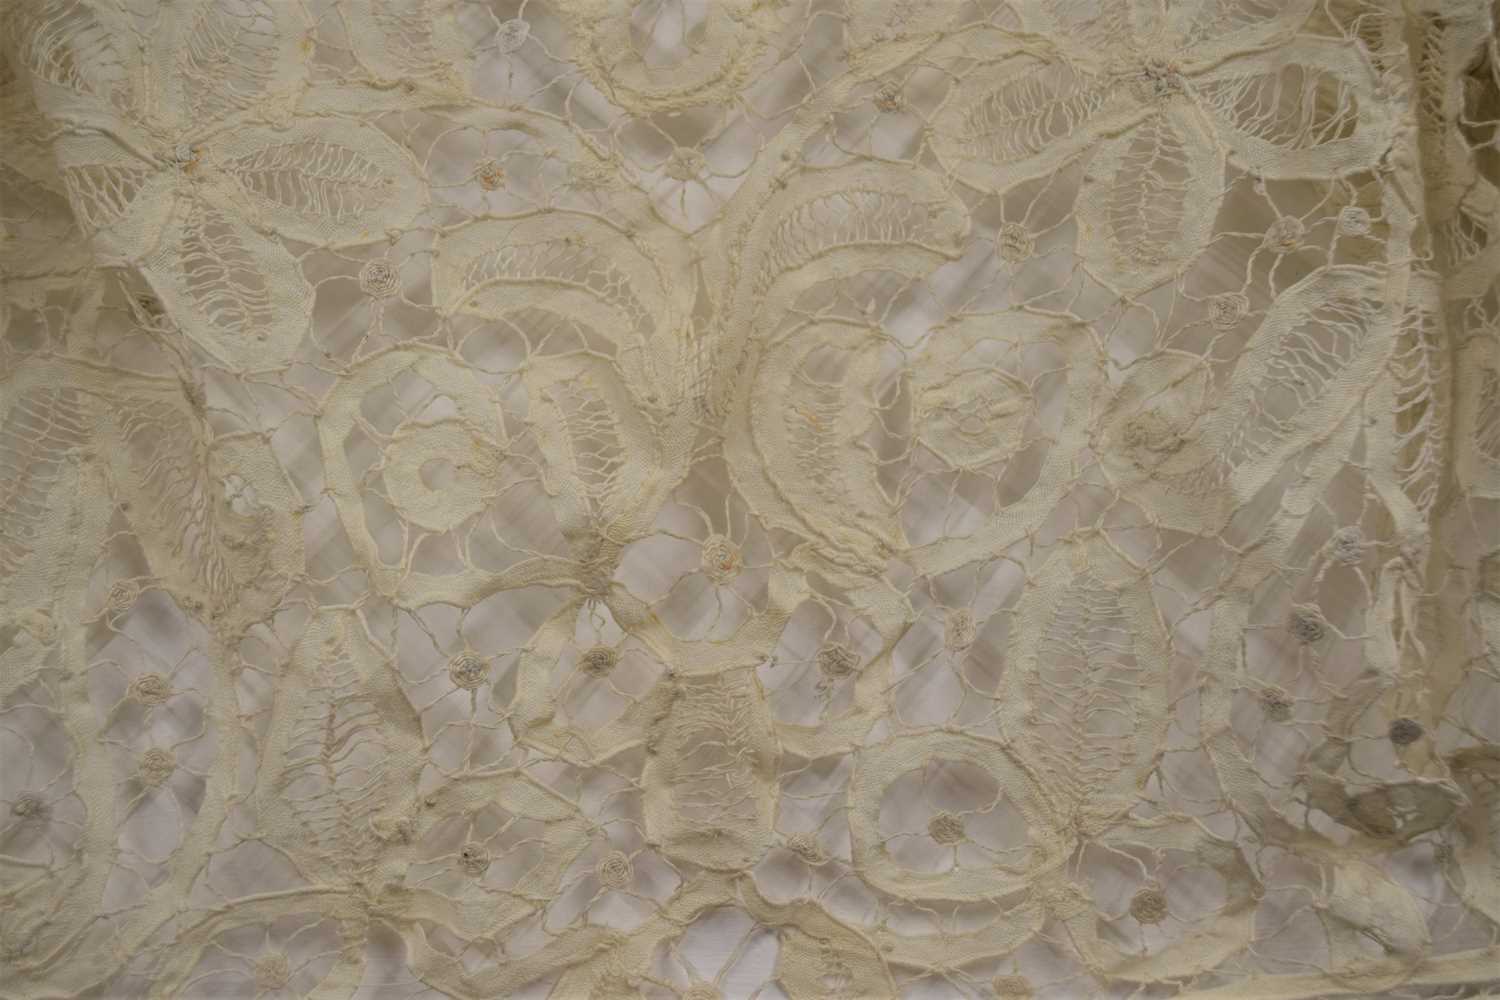 A cream bobbin lace overshirt - Image 2 of 2